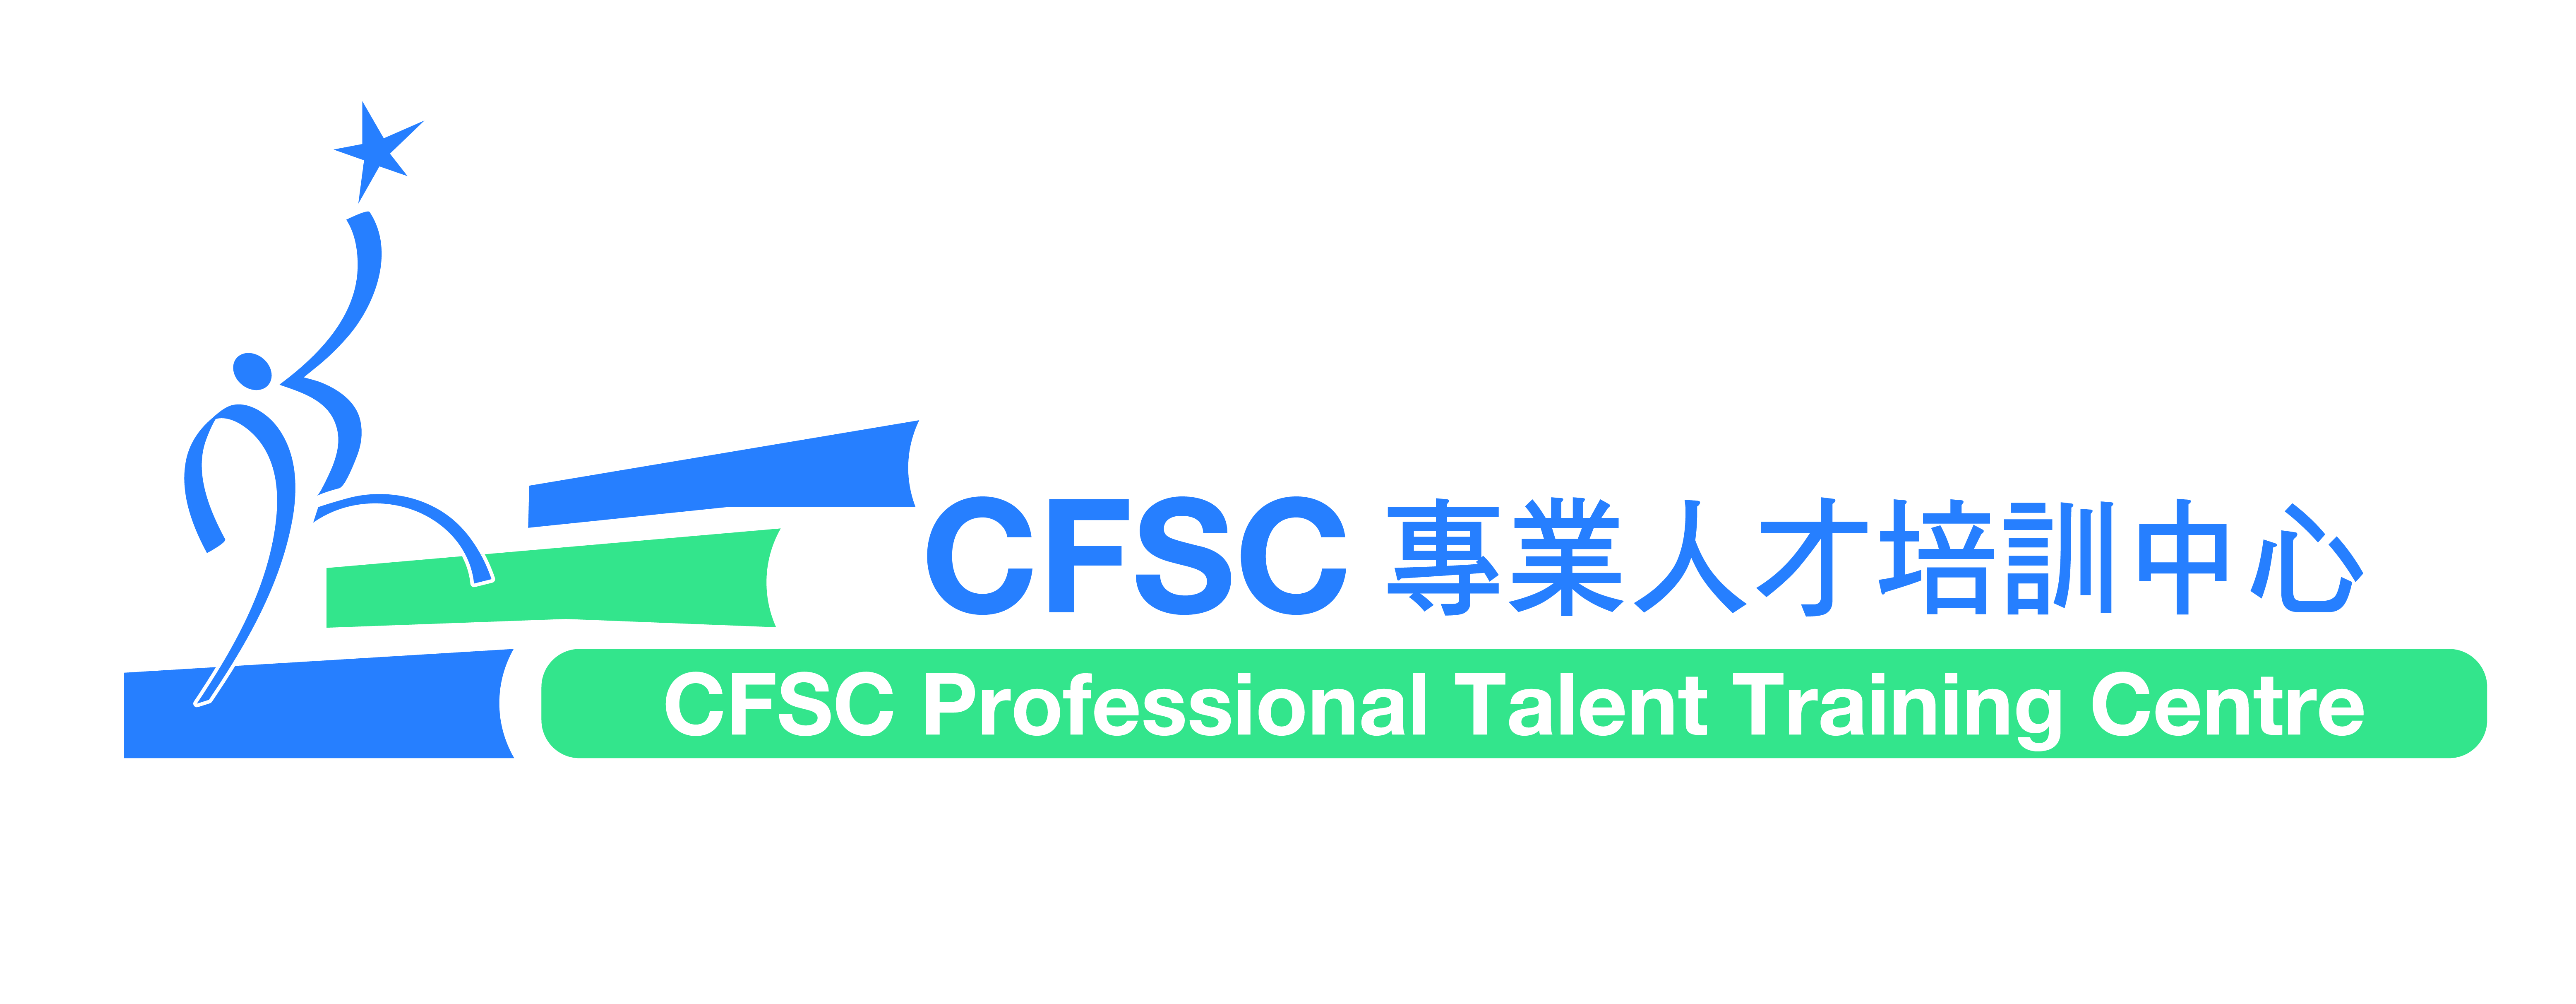 CFSC Professional Talent Training Centre Logo